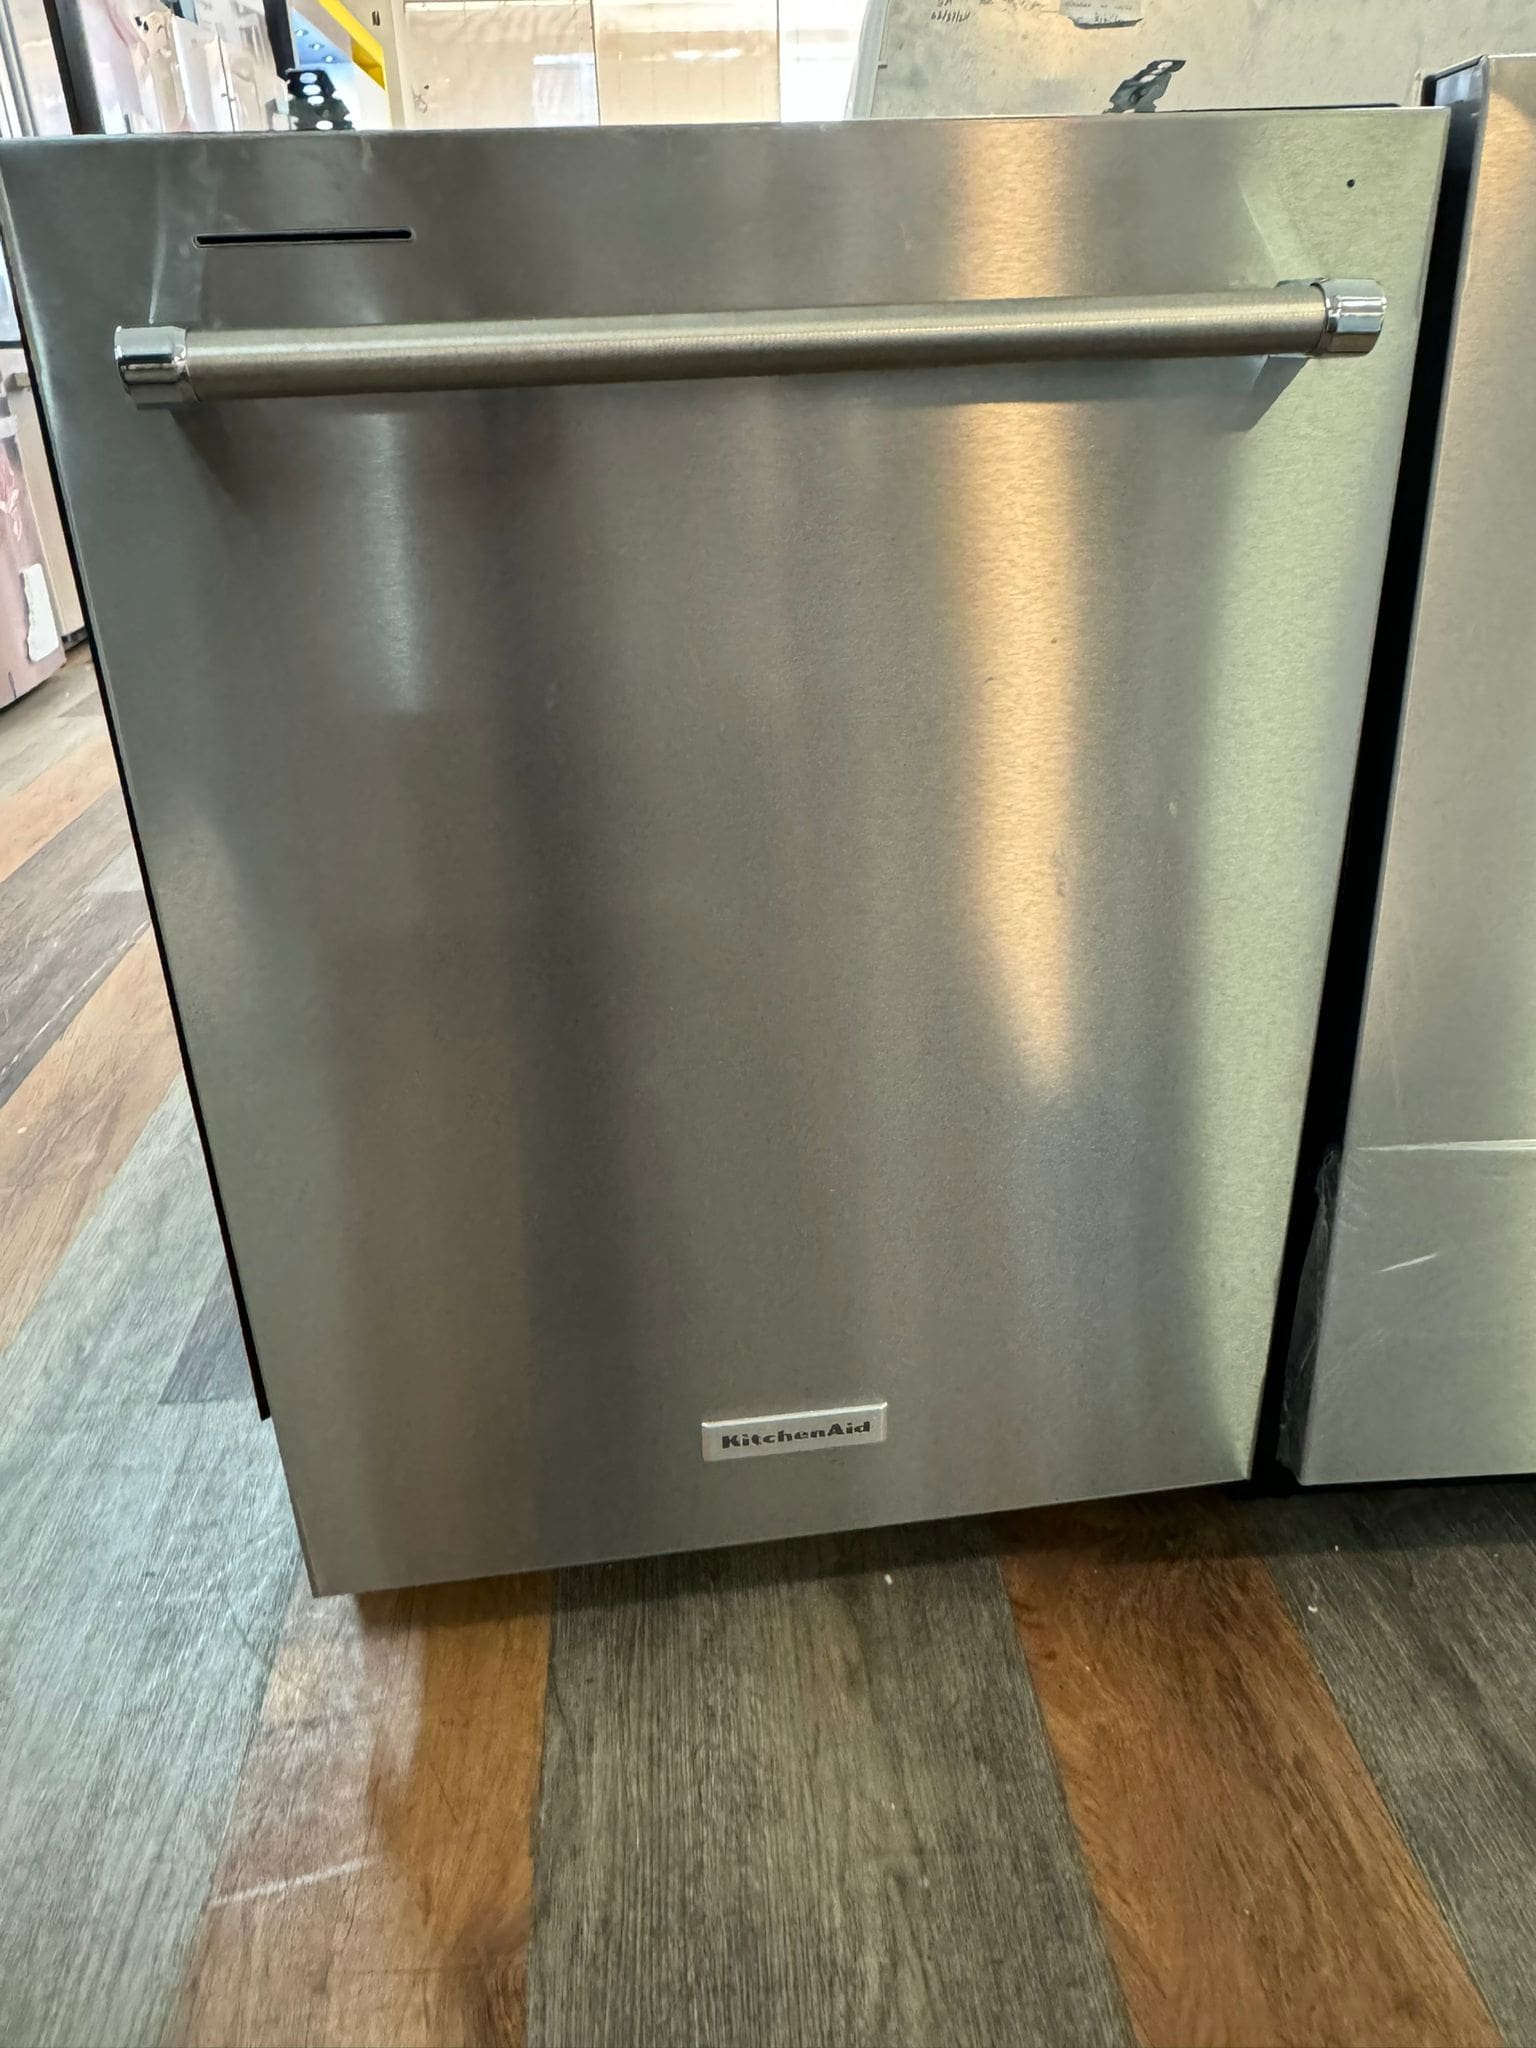 KitchenAid New Dishwasher – Stainless Steel